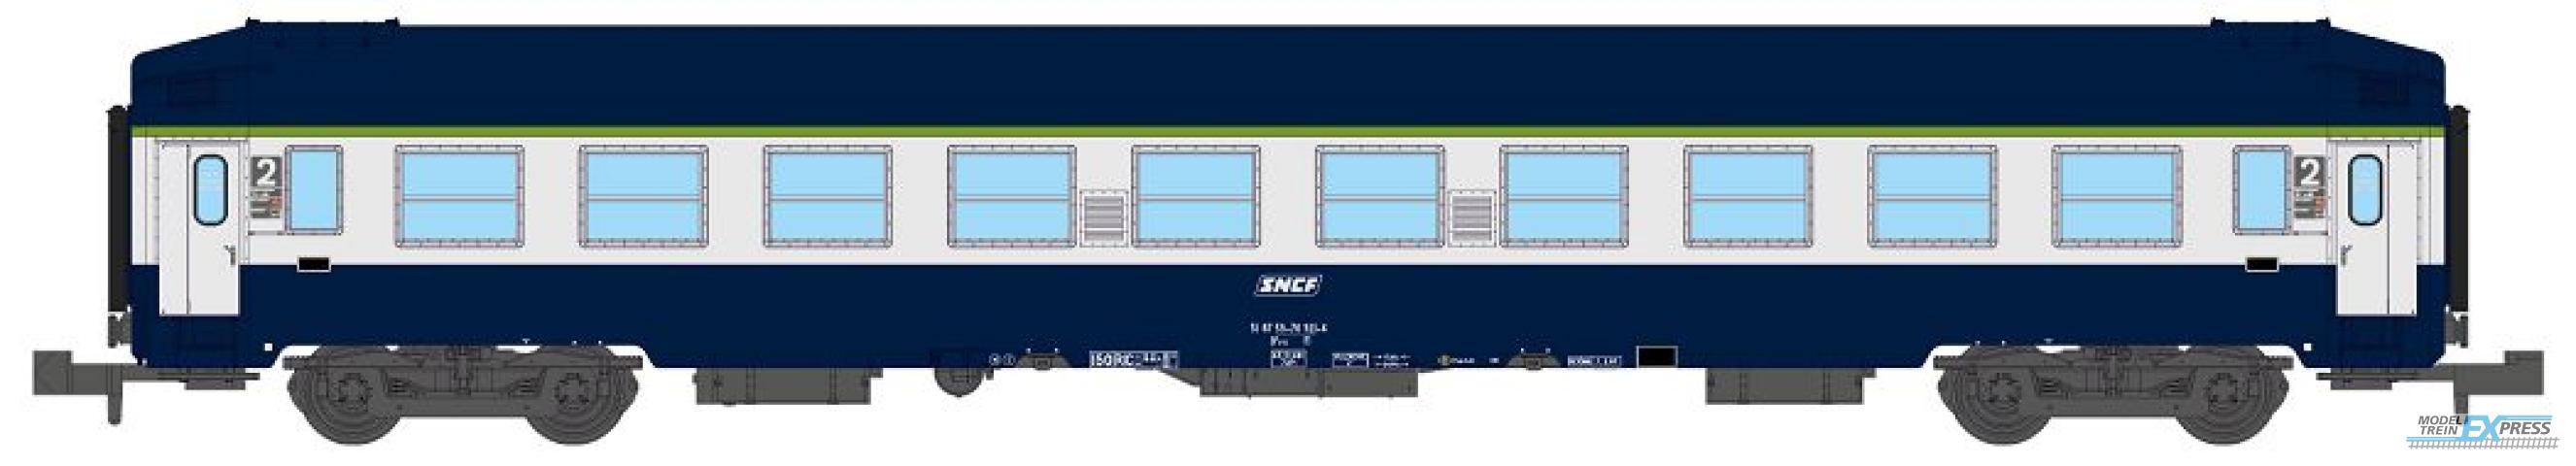 REE models NW-218 UIC SLEEPING CAR, High roof, framed logo, Blue TEN color Era IV